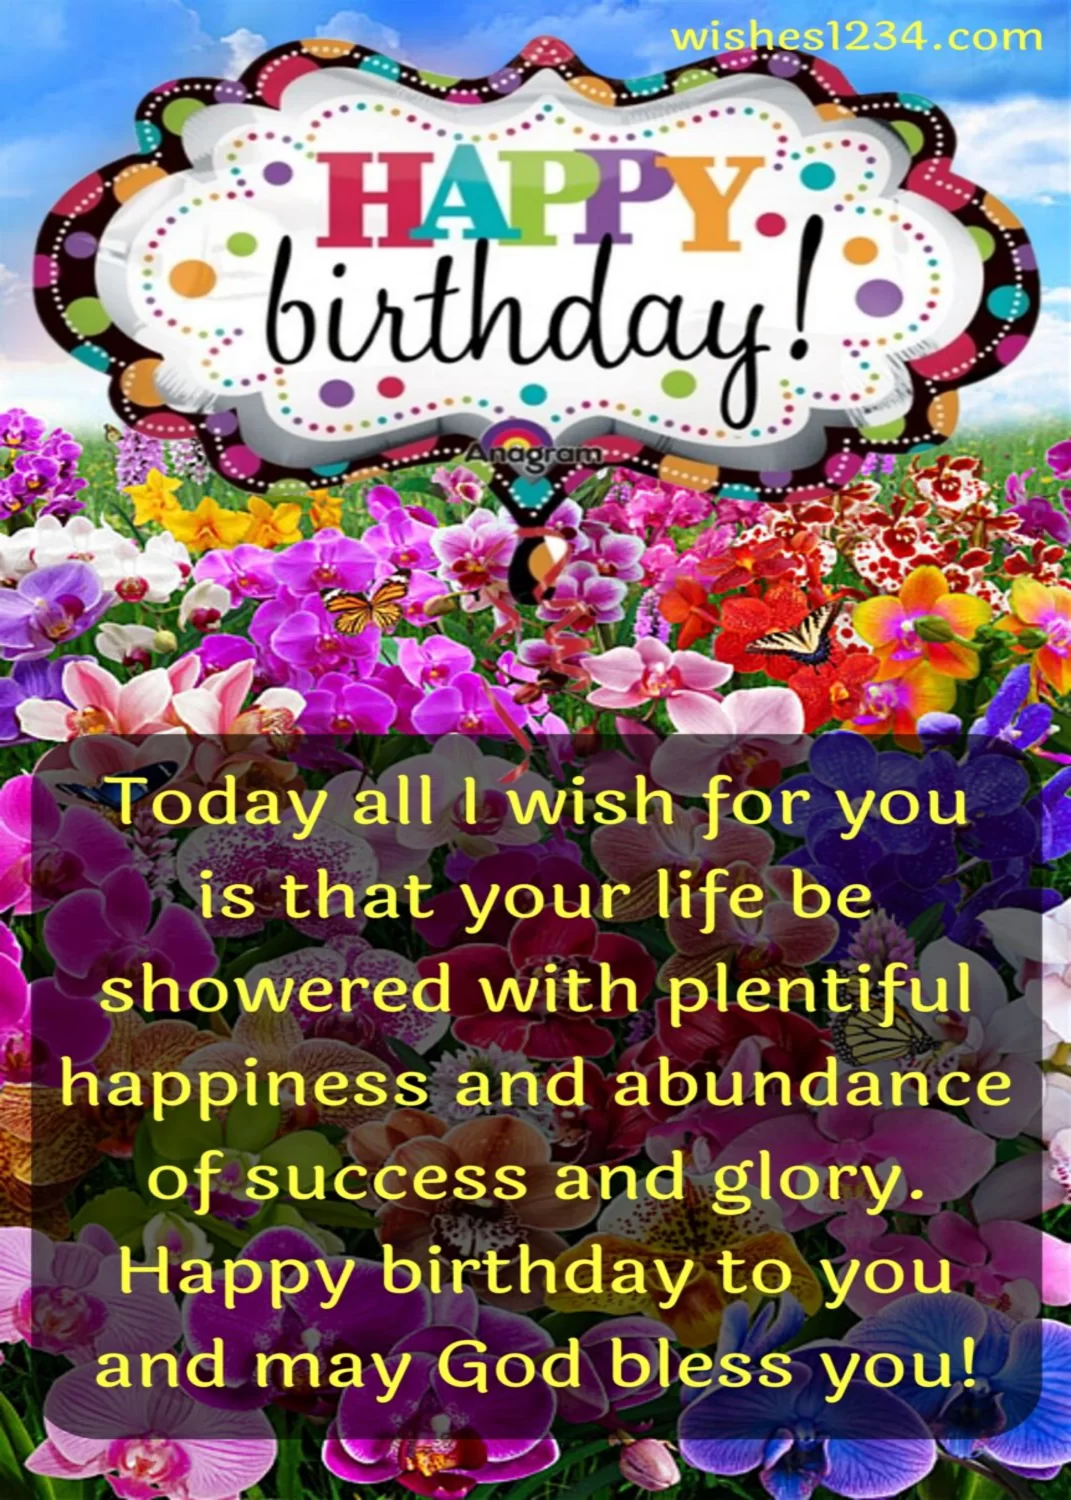 Birthday wishes with Orchid garden, Happy Birthday Friend.